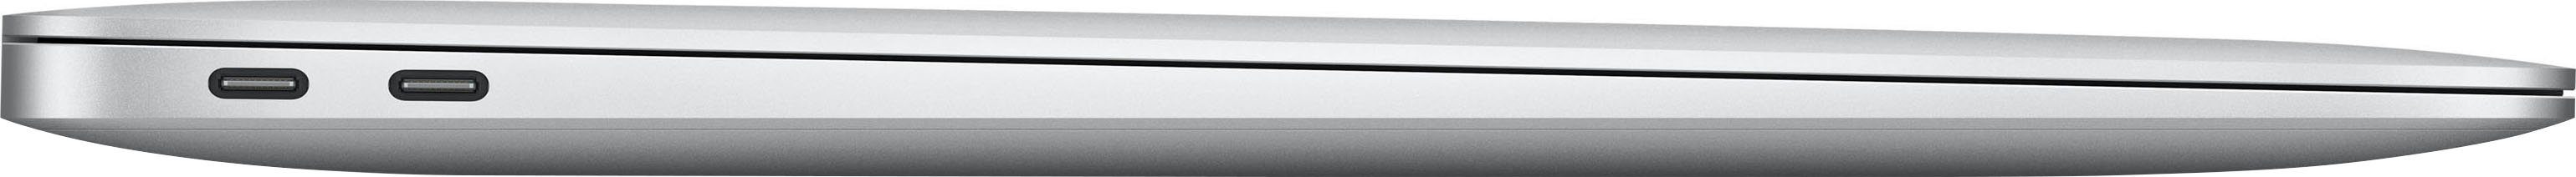 Apple MacBook Air Notebook (33,78 CPU) SSD, M1, Zoll, 8-core Apple GB M1, 256 cm/13,3